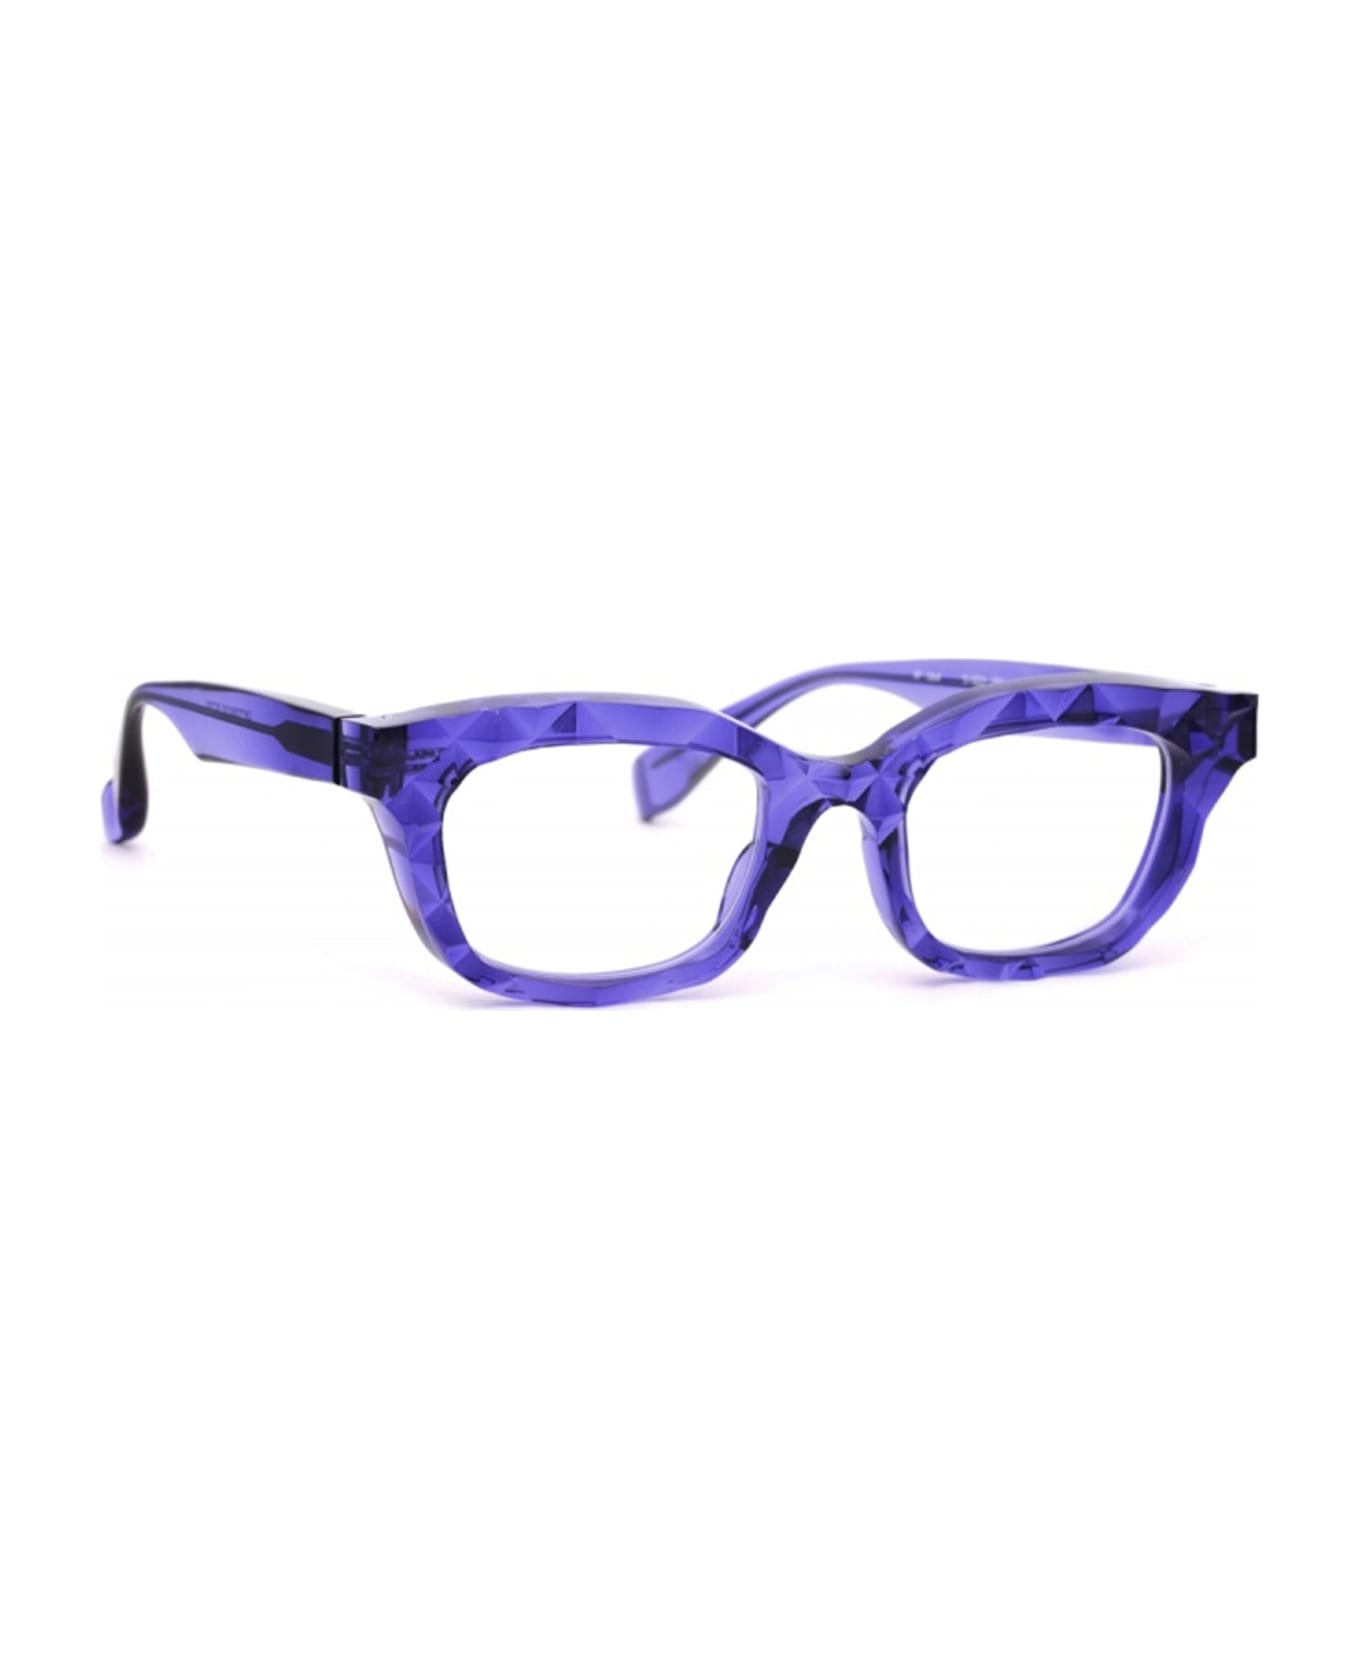 FACTORY900 Rf-064 - Violet Glasses - purple